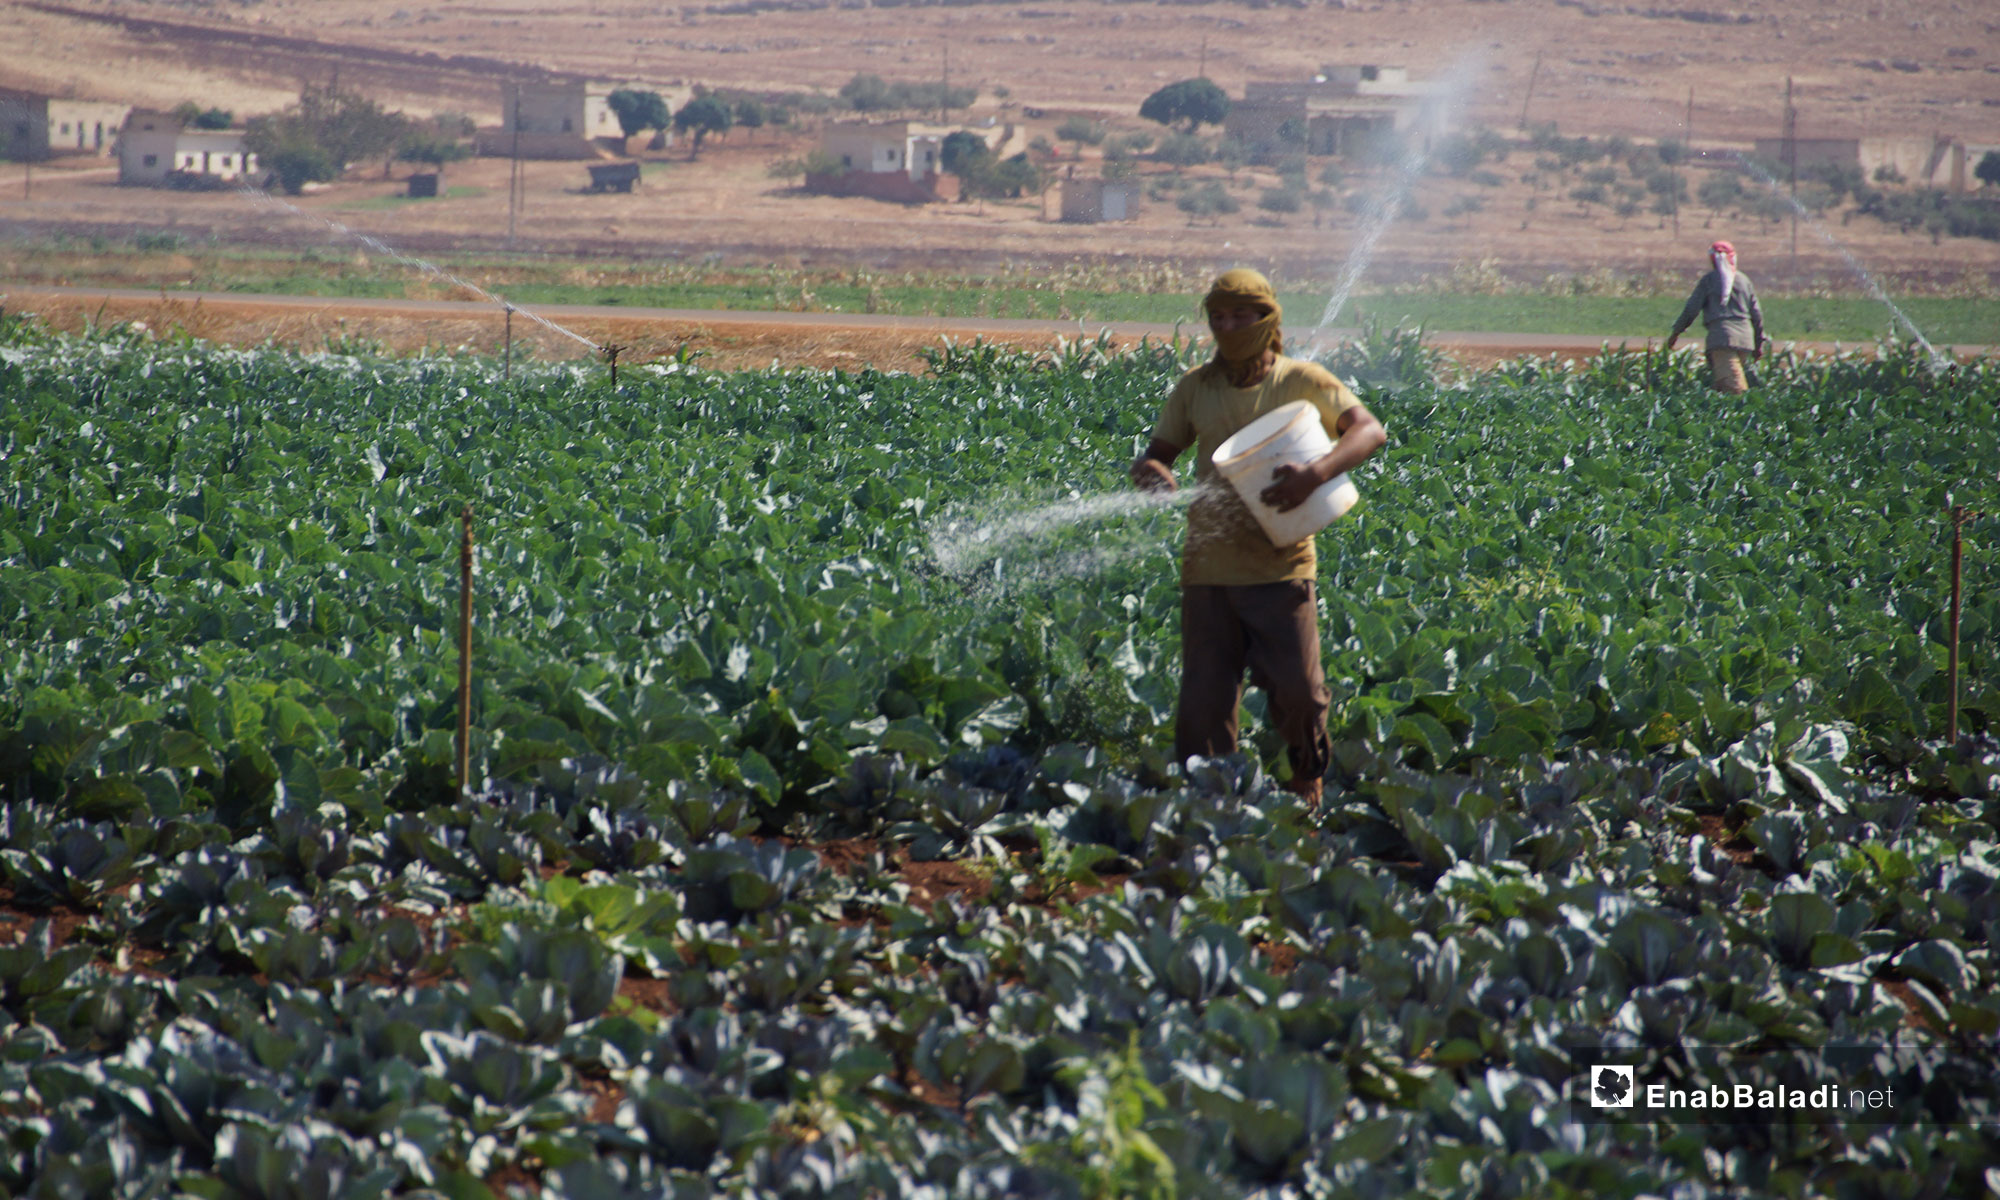 Vegetable farming in rural Hama – August 29, 2018 (Enab Baladi)